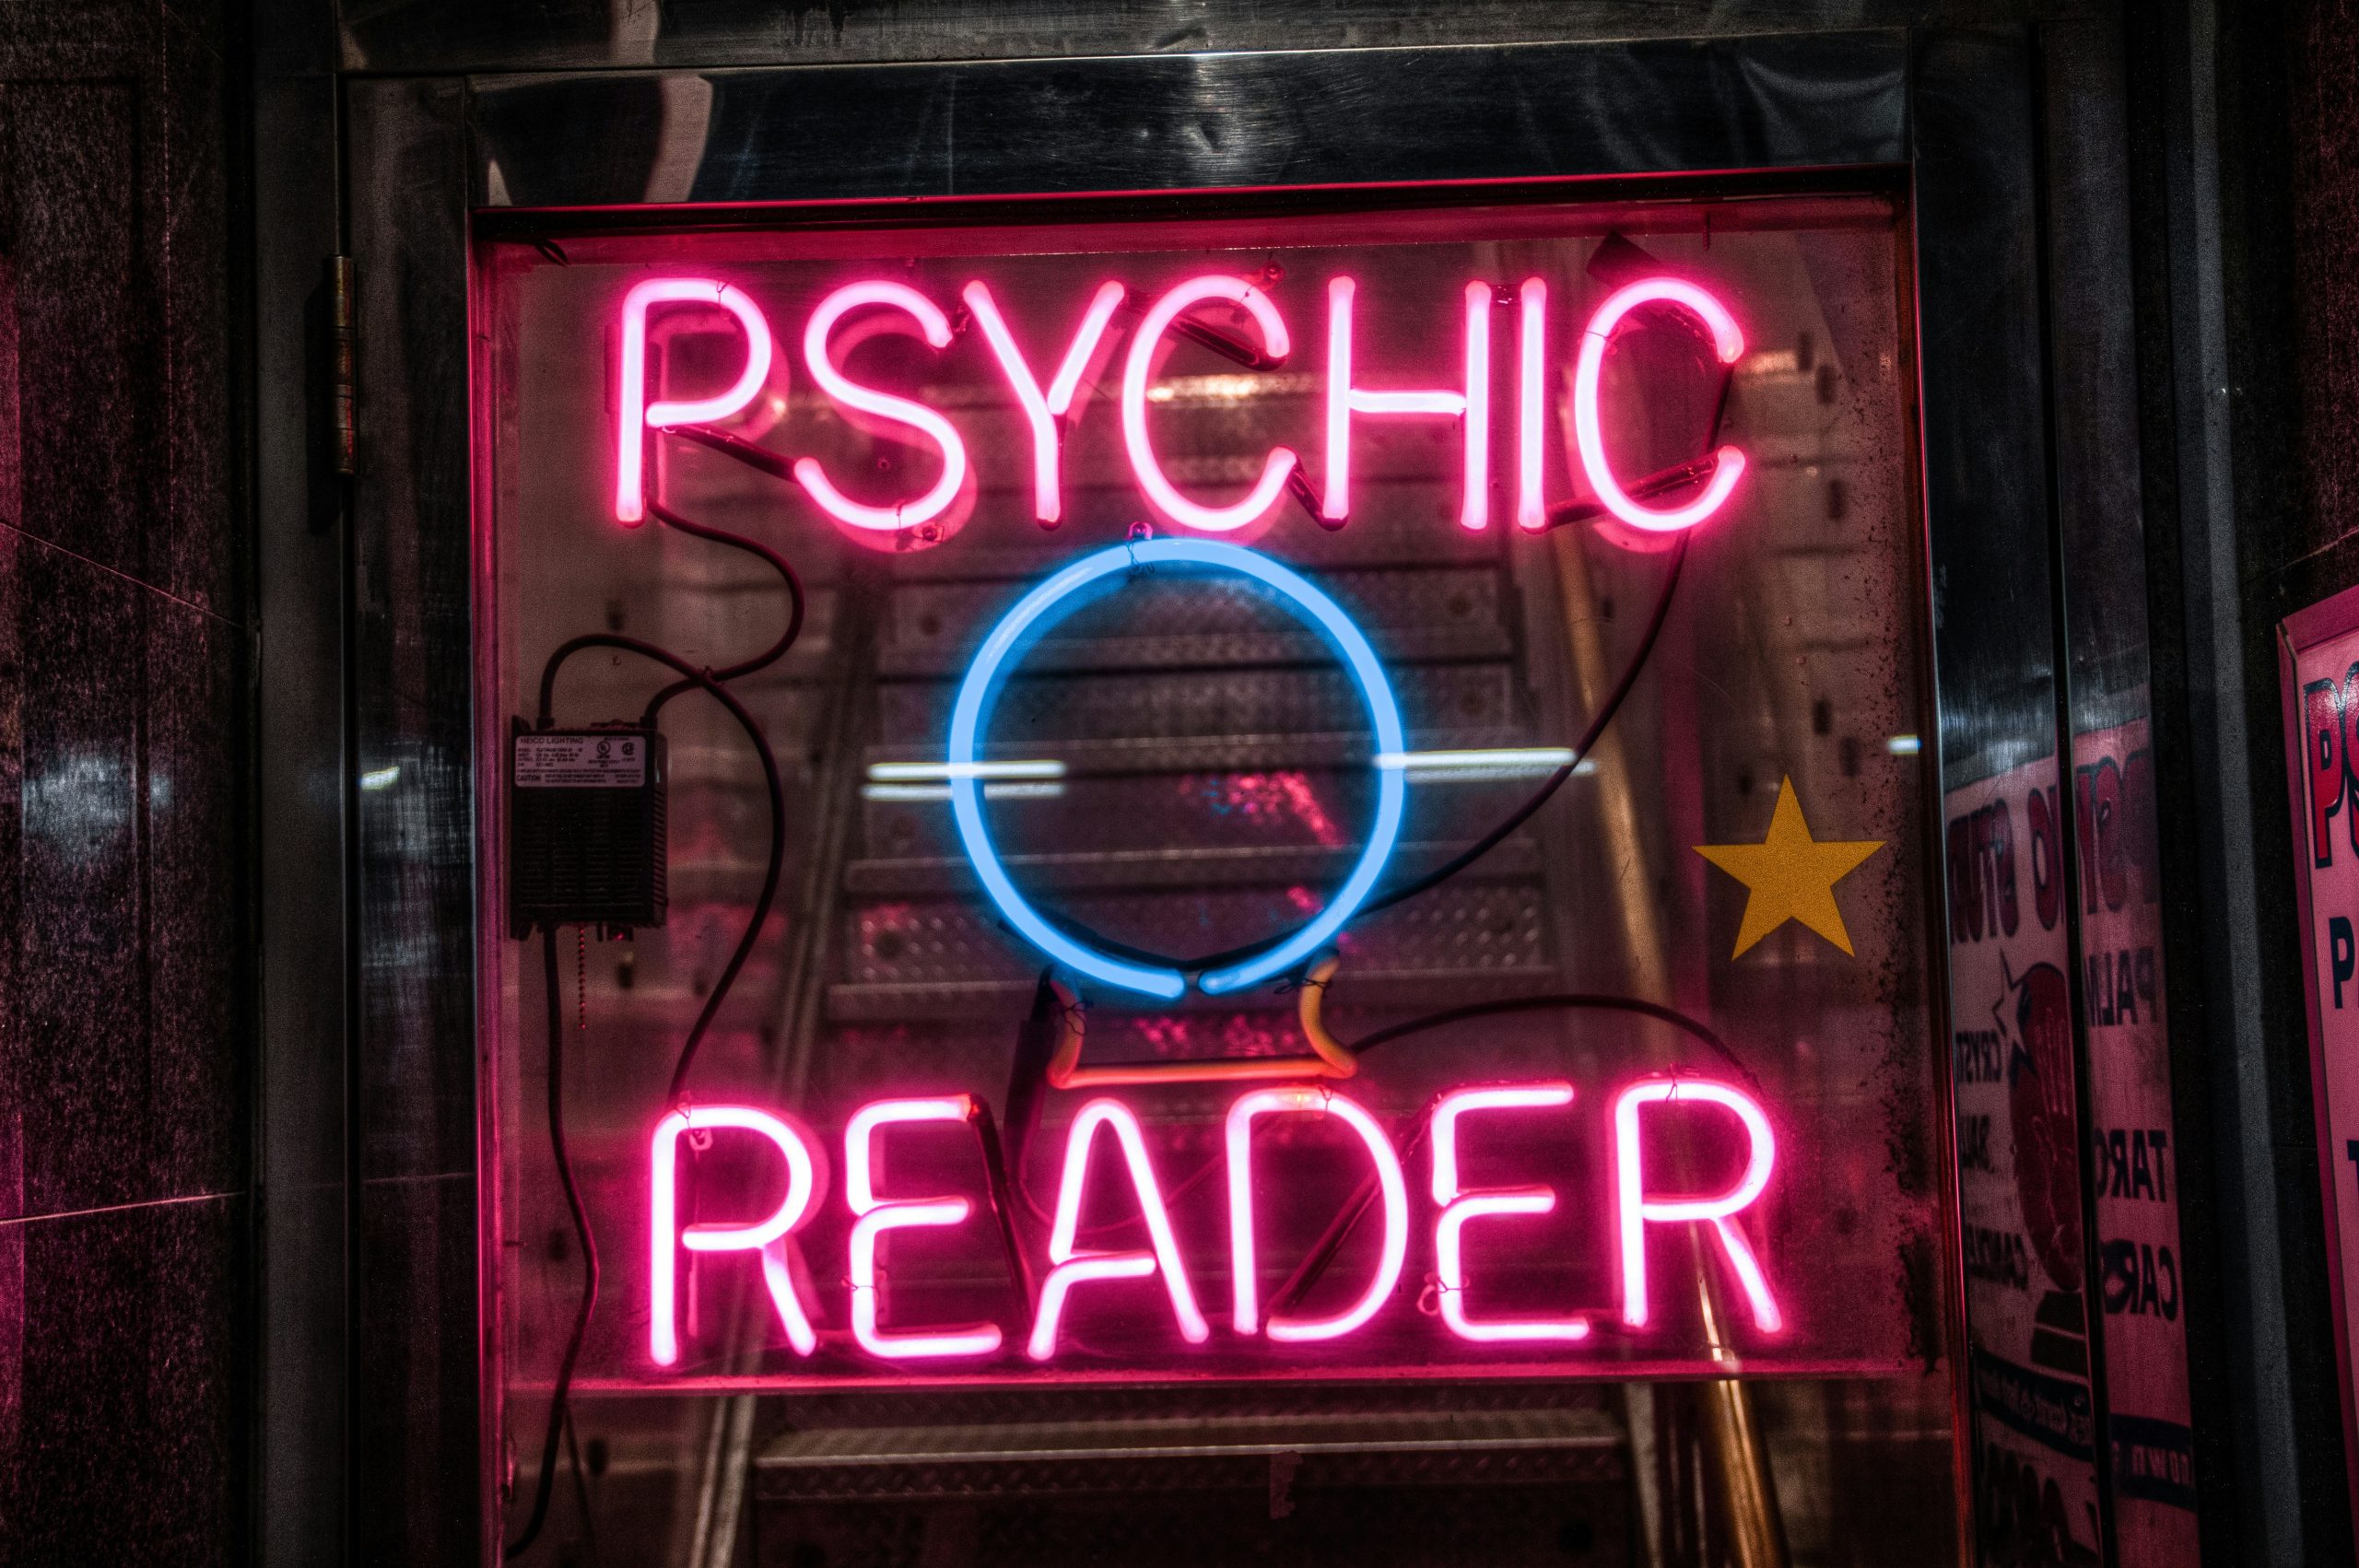 Psychic Reader neon sign